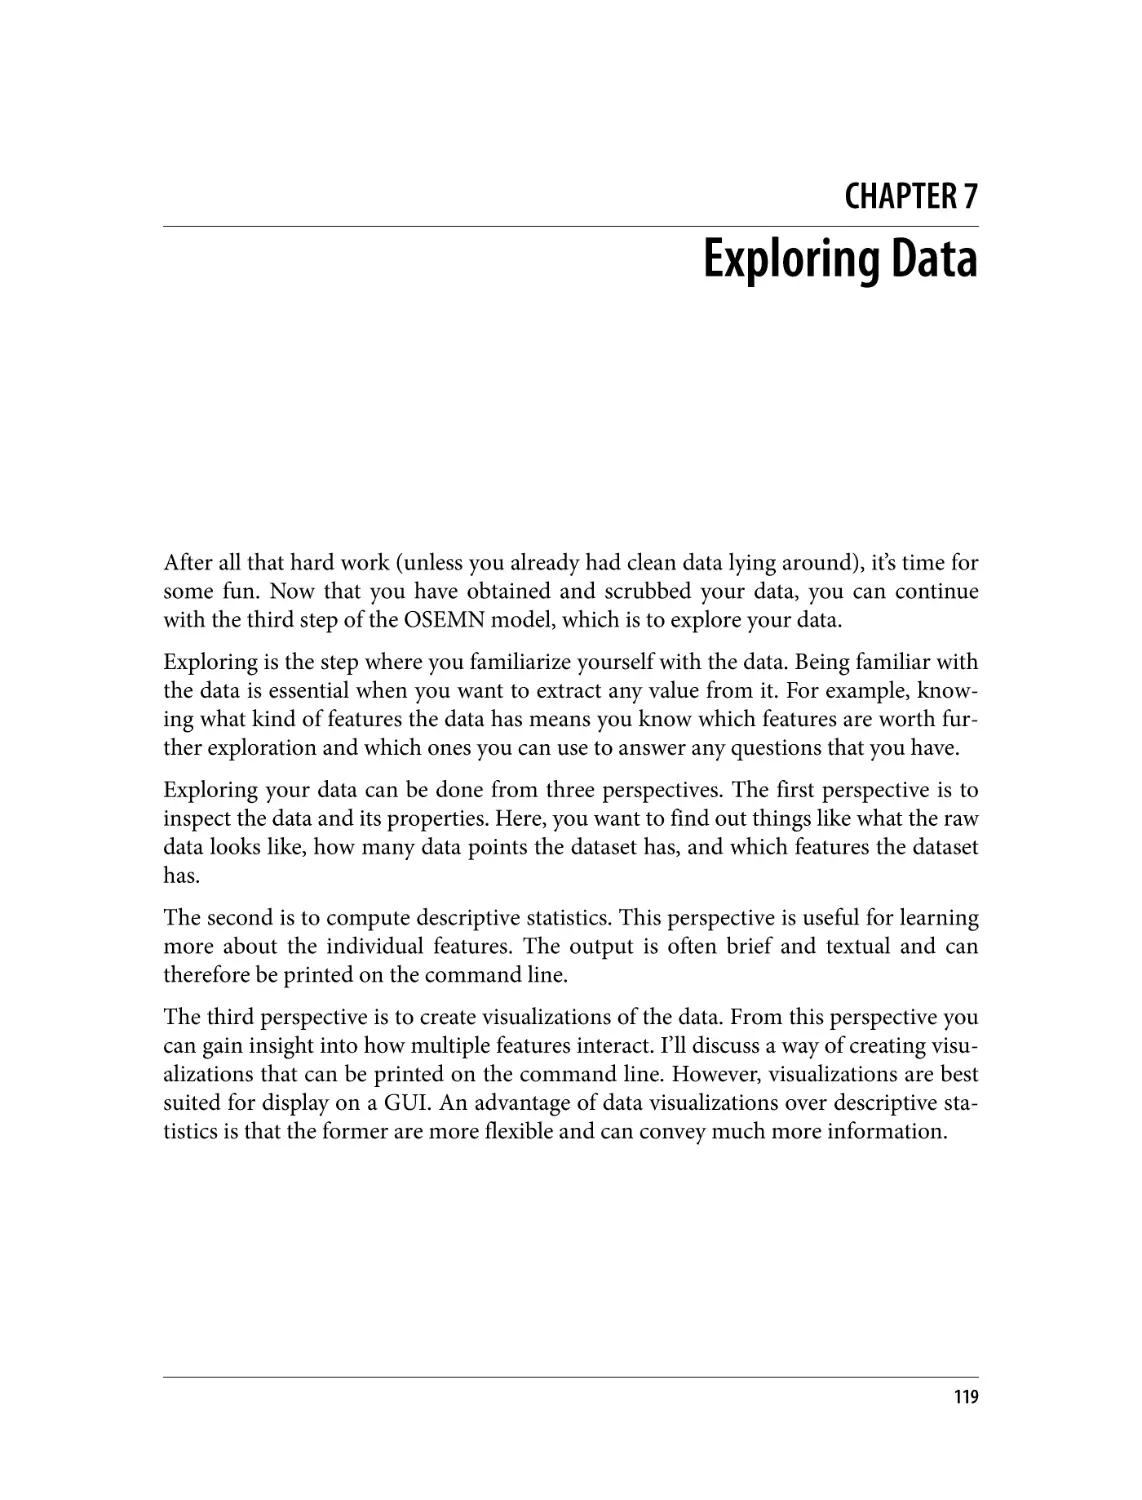 Chapter 7. Exploring Data